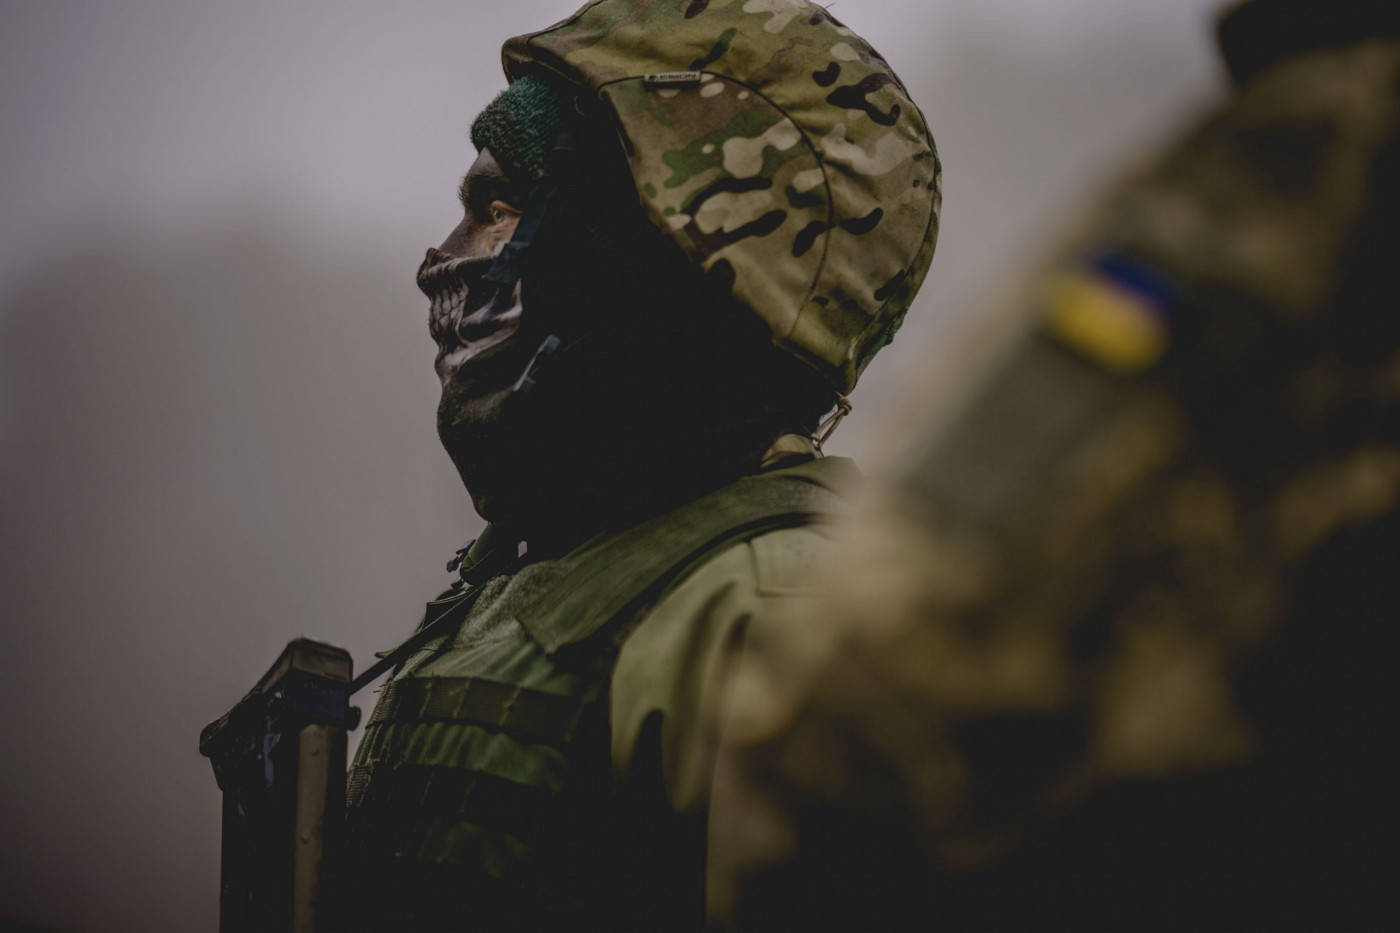 Caption: A British Defense Soldier In Ukrainian Military Uniform